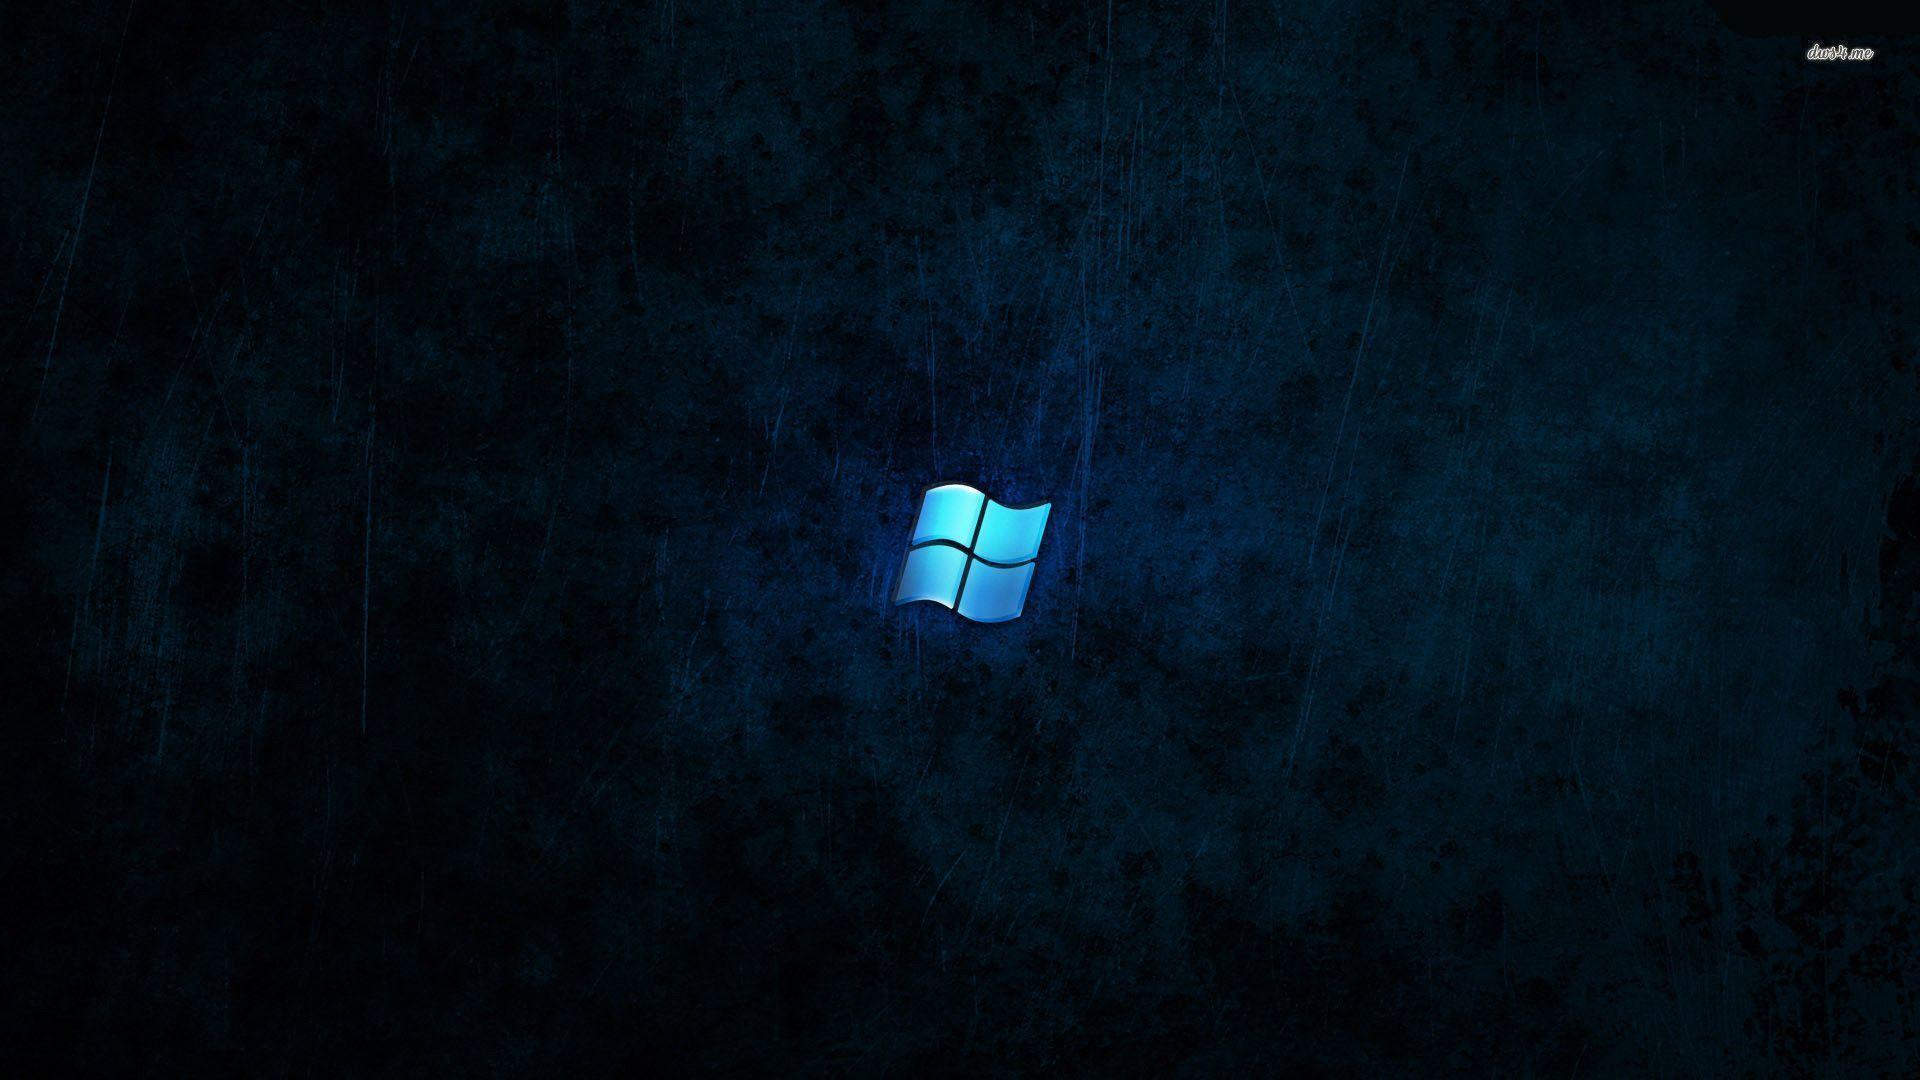 Blue Windows logo wallpaper wallpaper - #